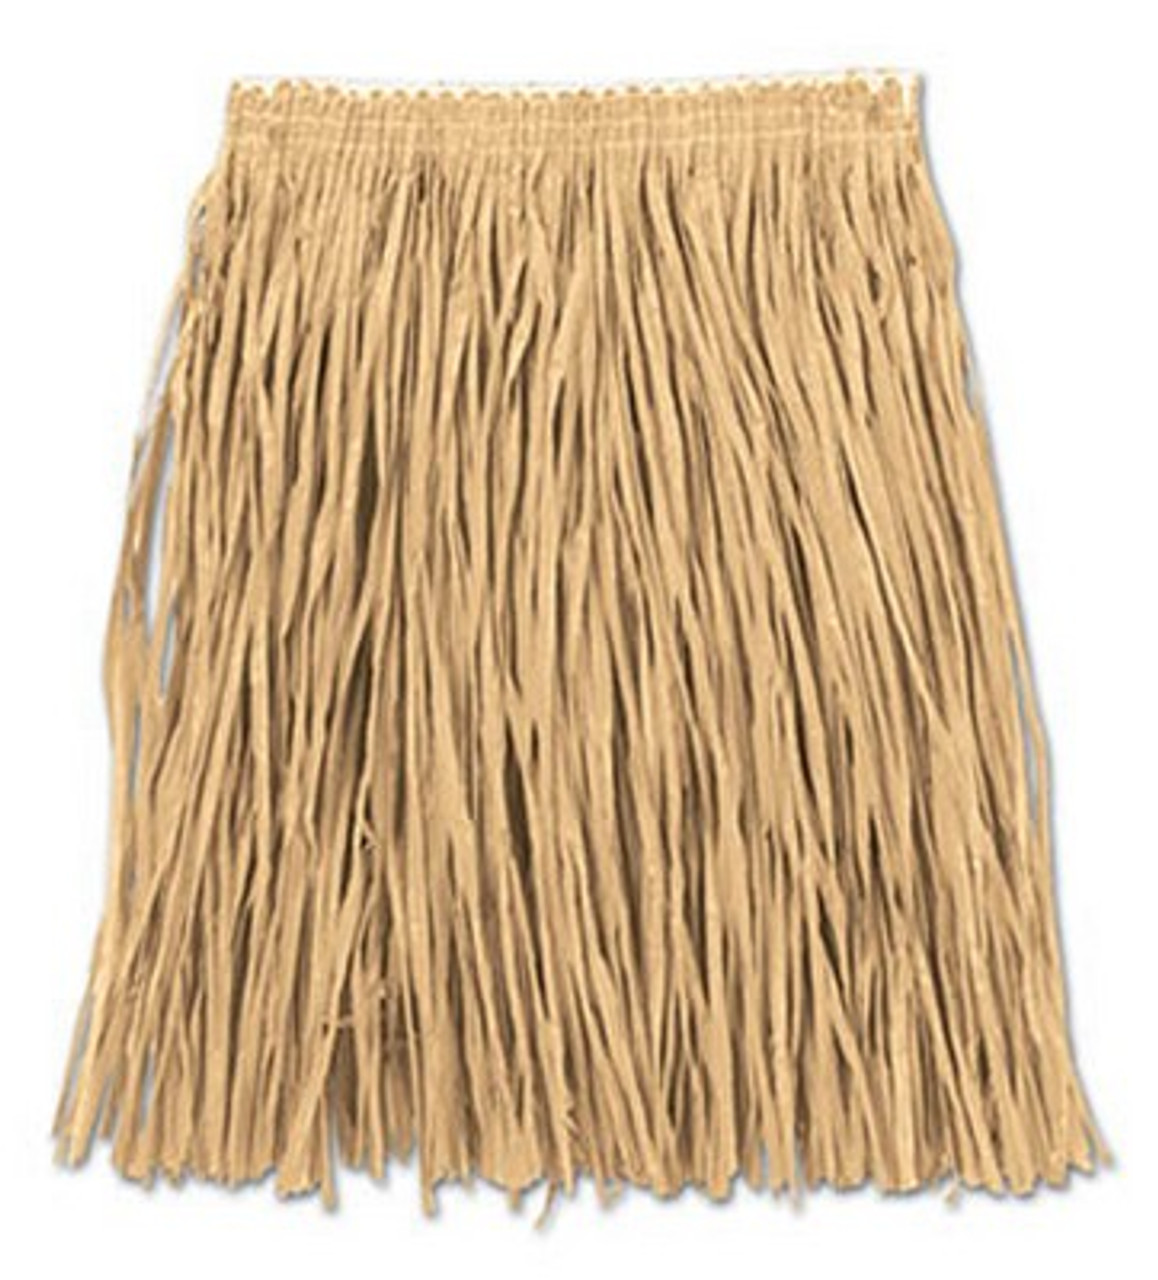 Grass Hula Skirt - Deluxe